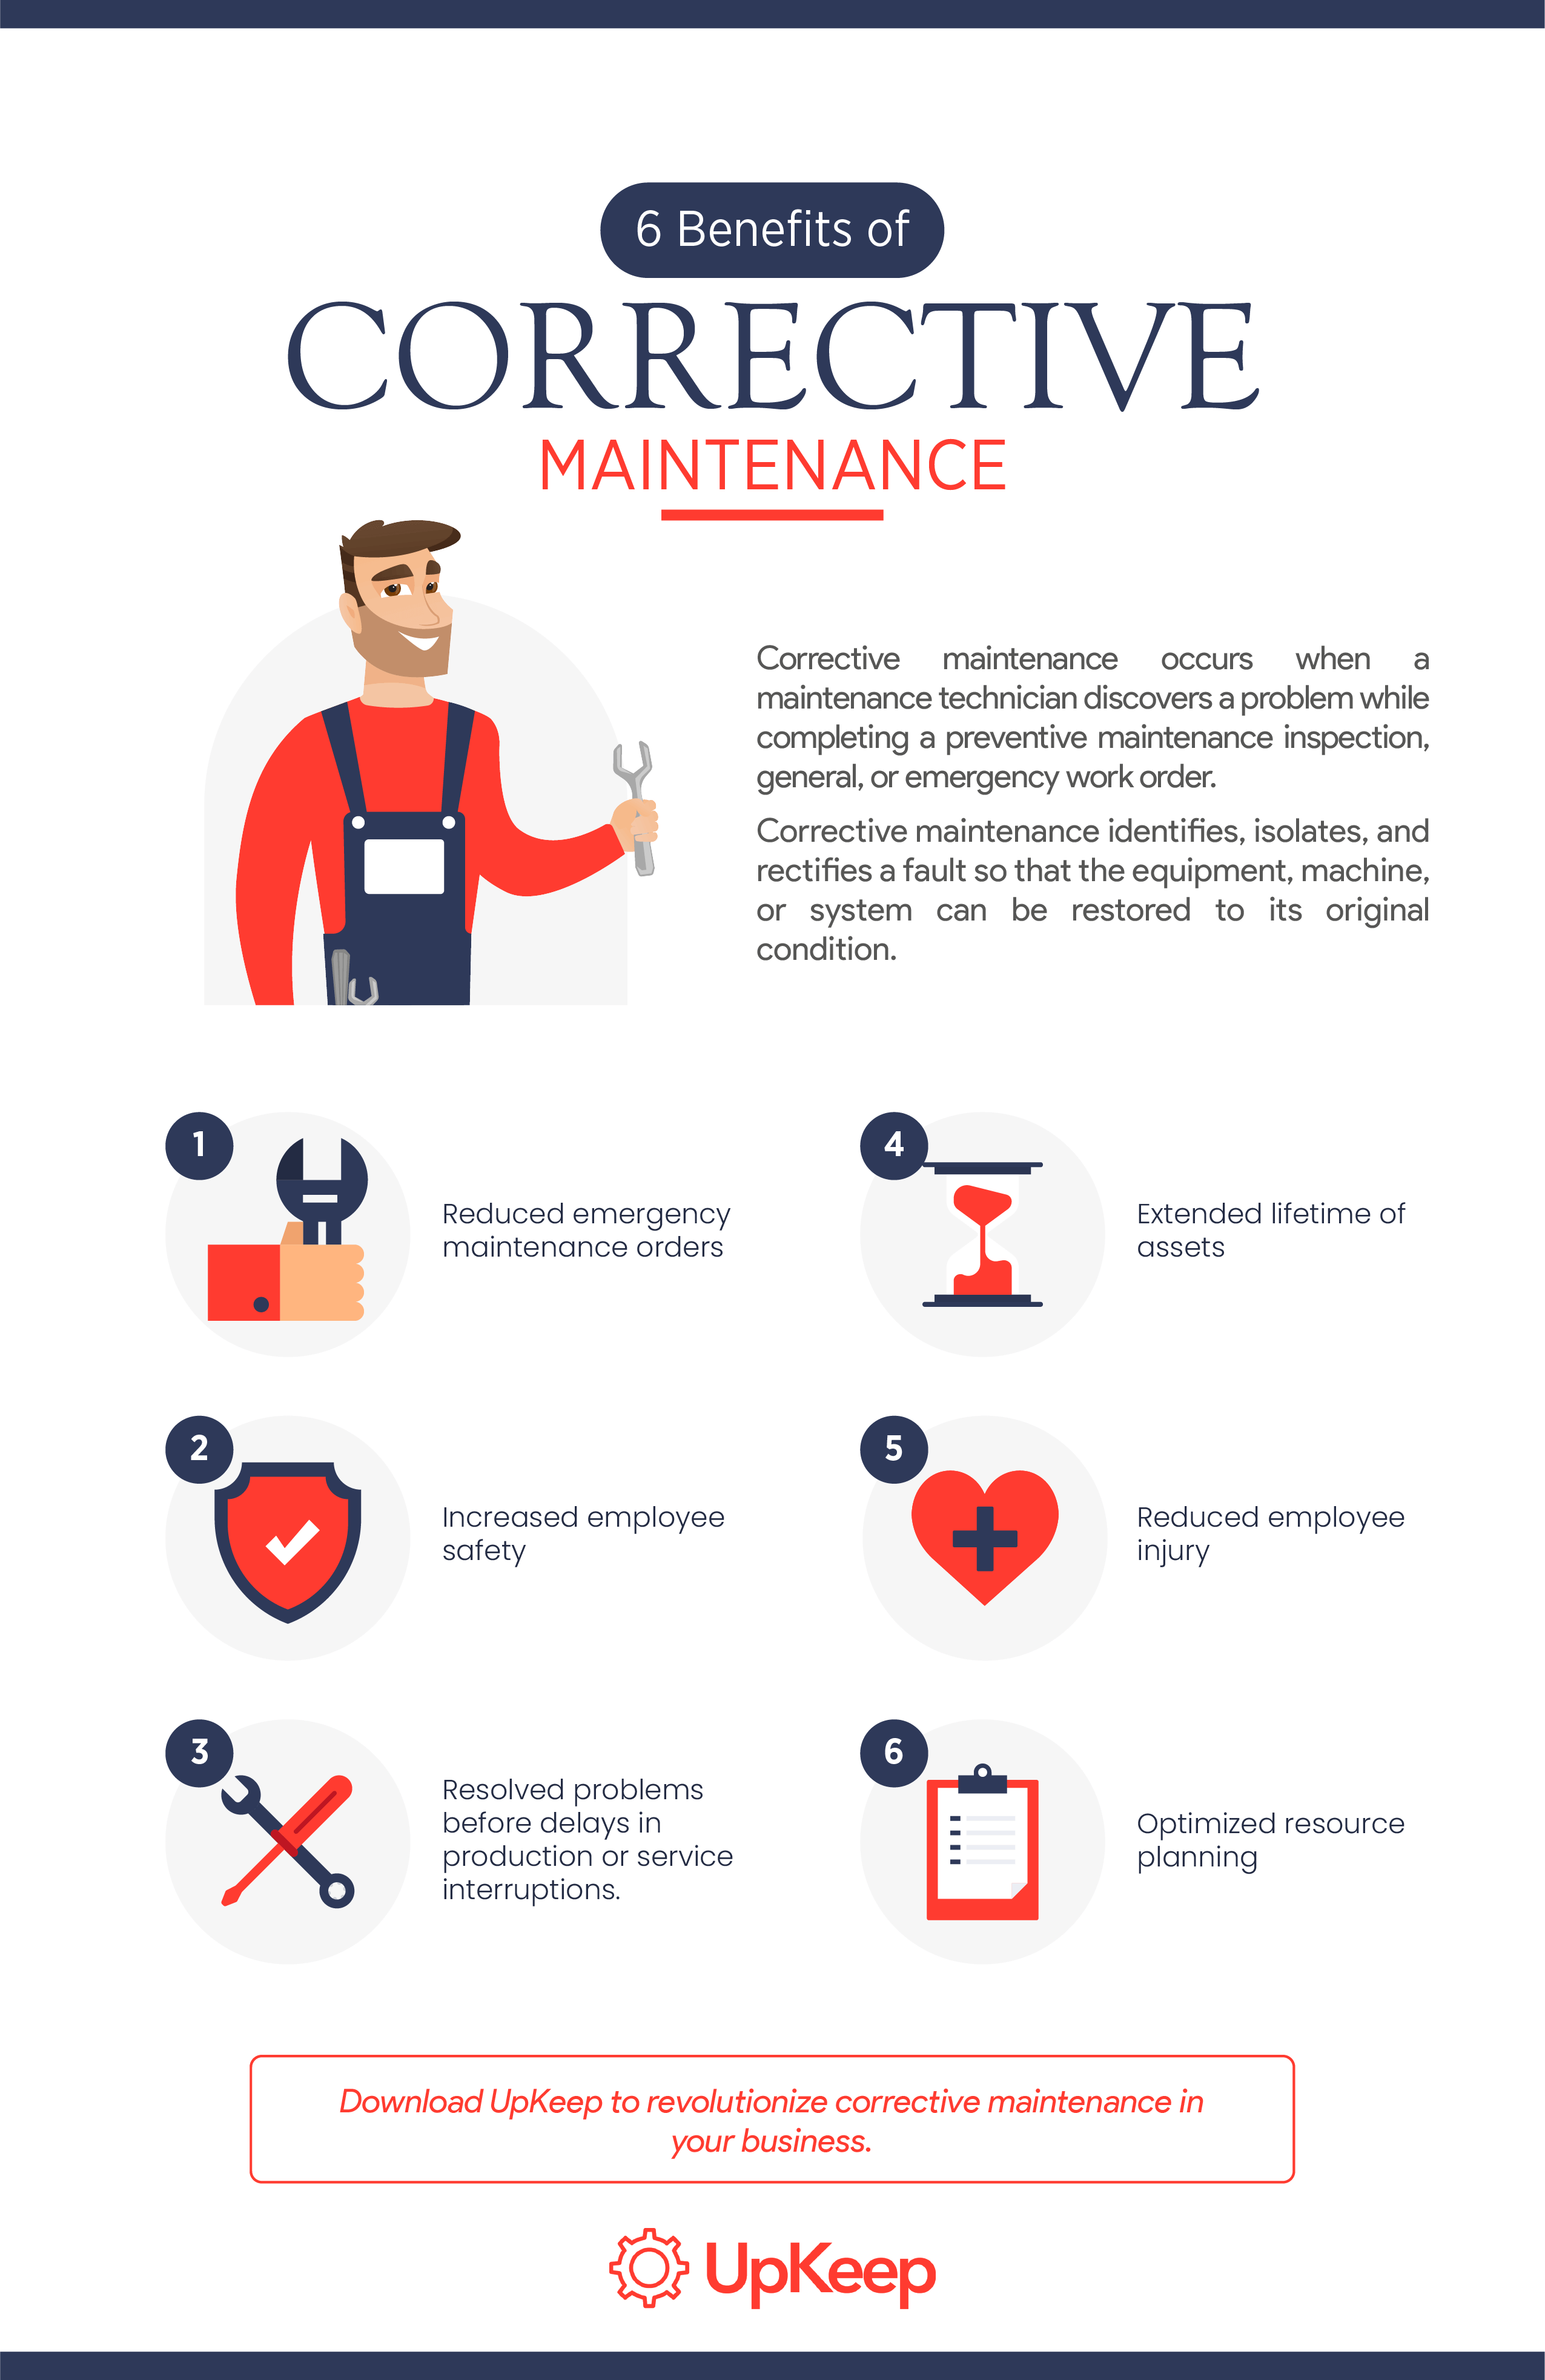 Benefits of Corrective Maintenance